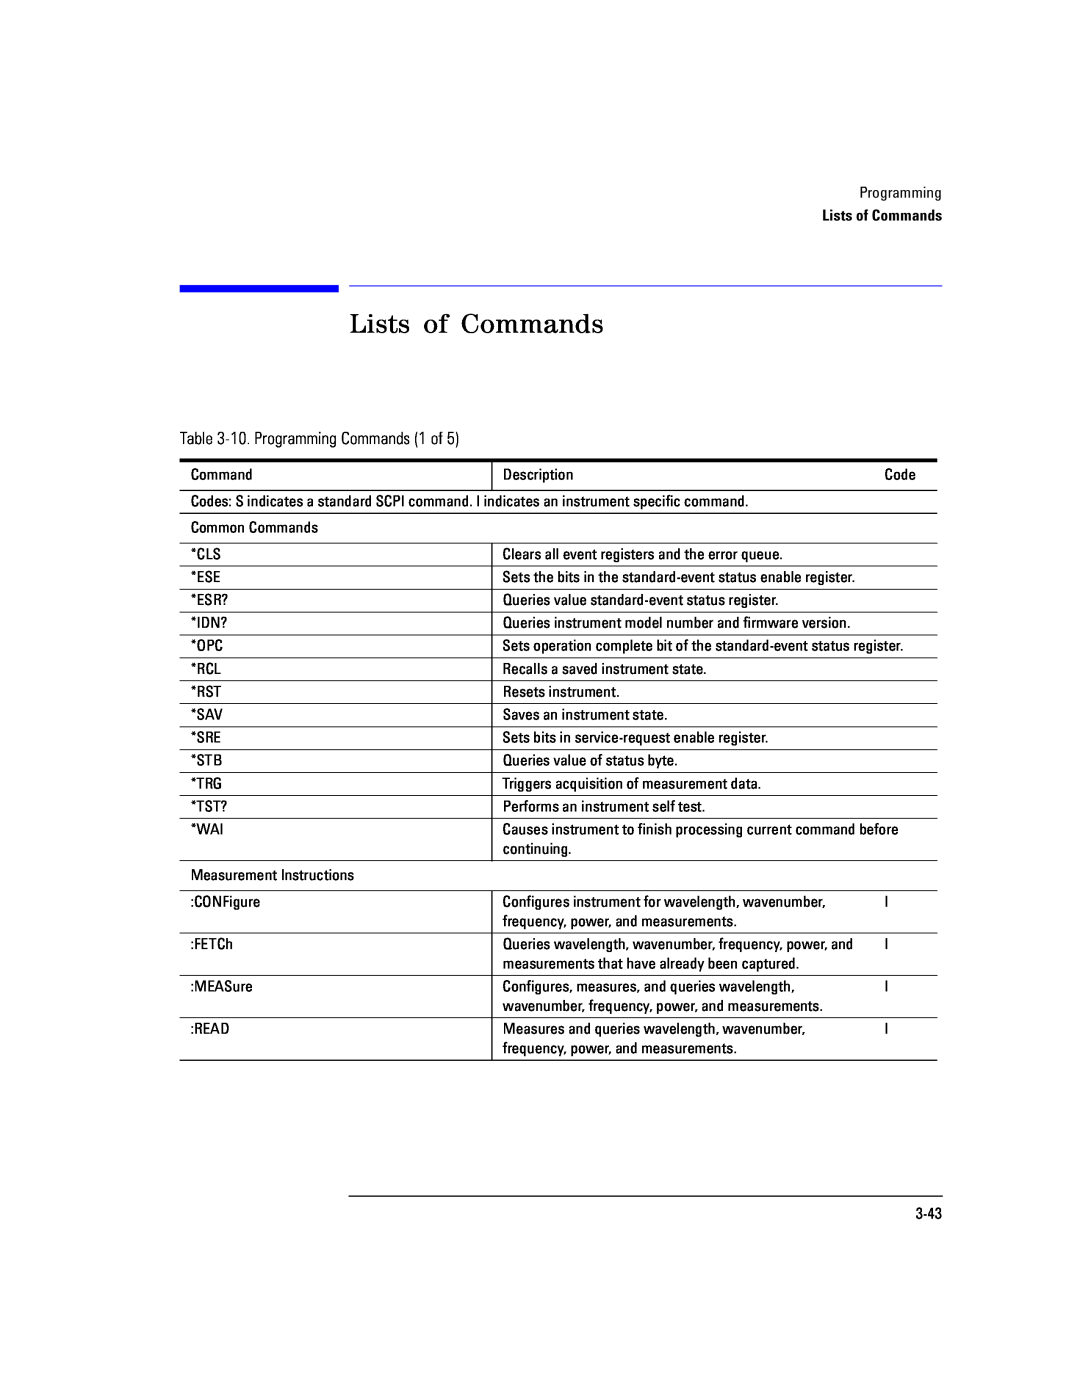 Agilent Technologies Agilent 86120C manual Lists of Commands, 10. Programming Commands 1 of 